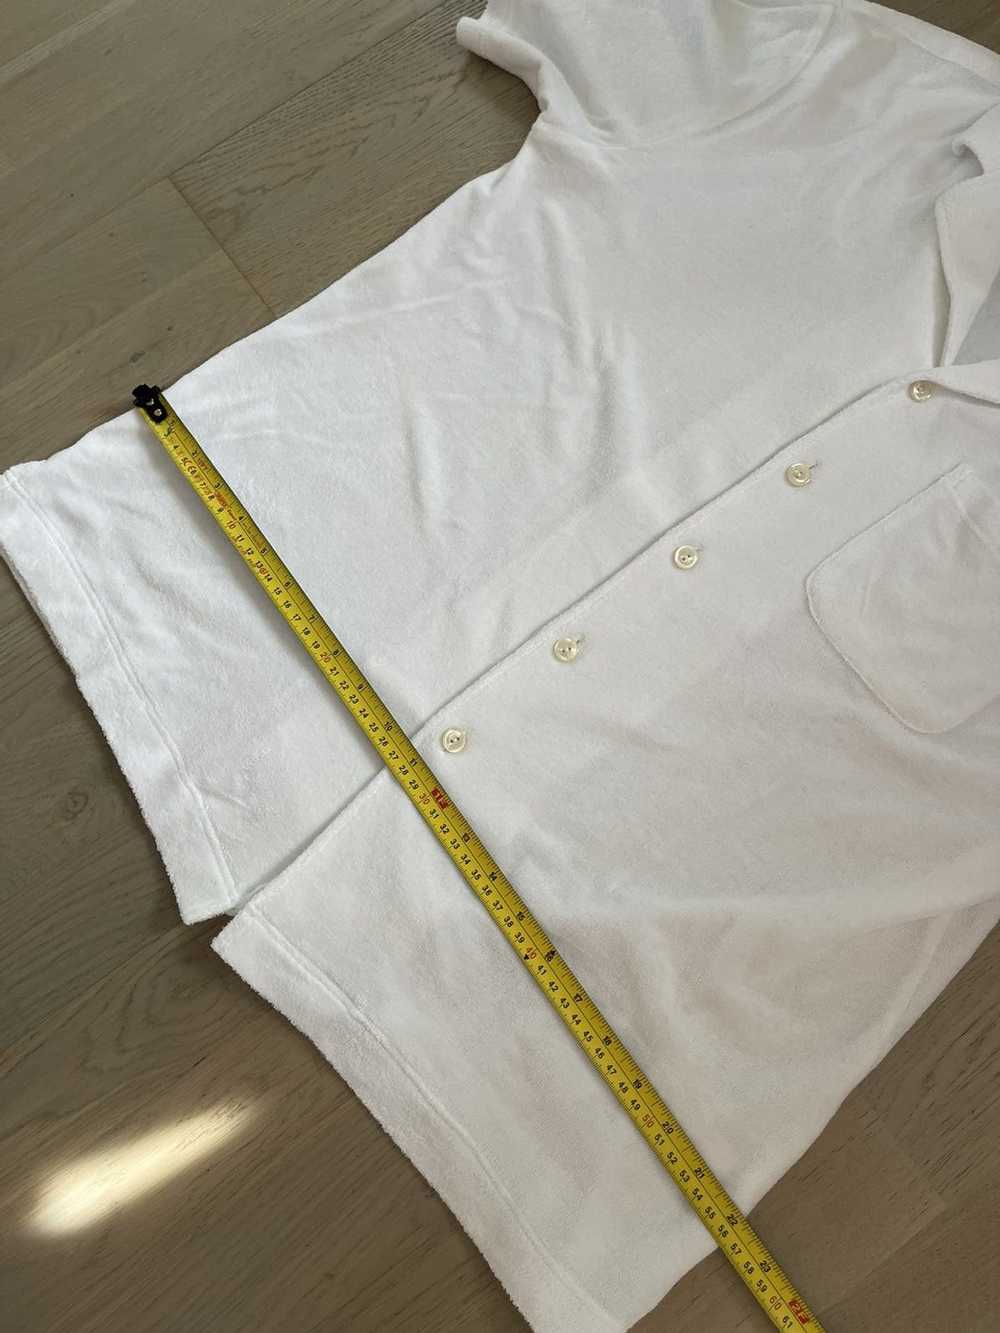 Eton ETON shirt real sizes in photos by tape meas… - image 7